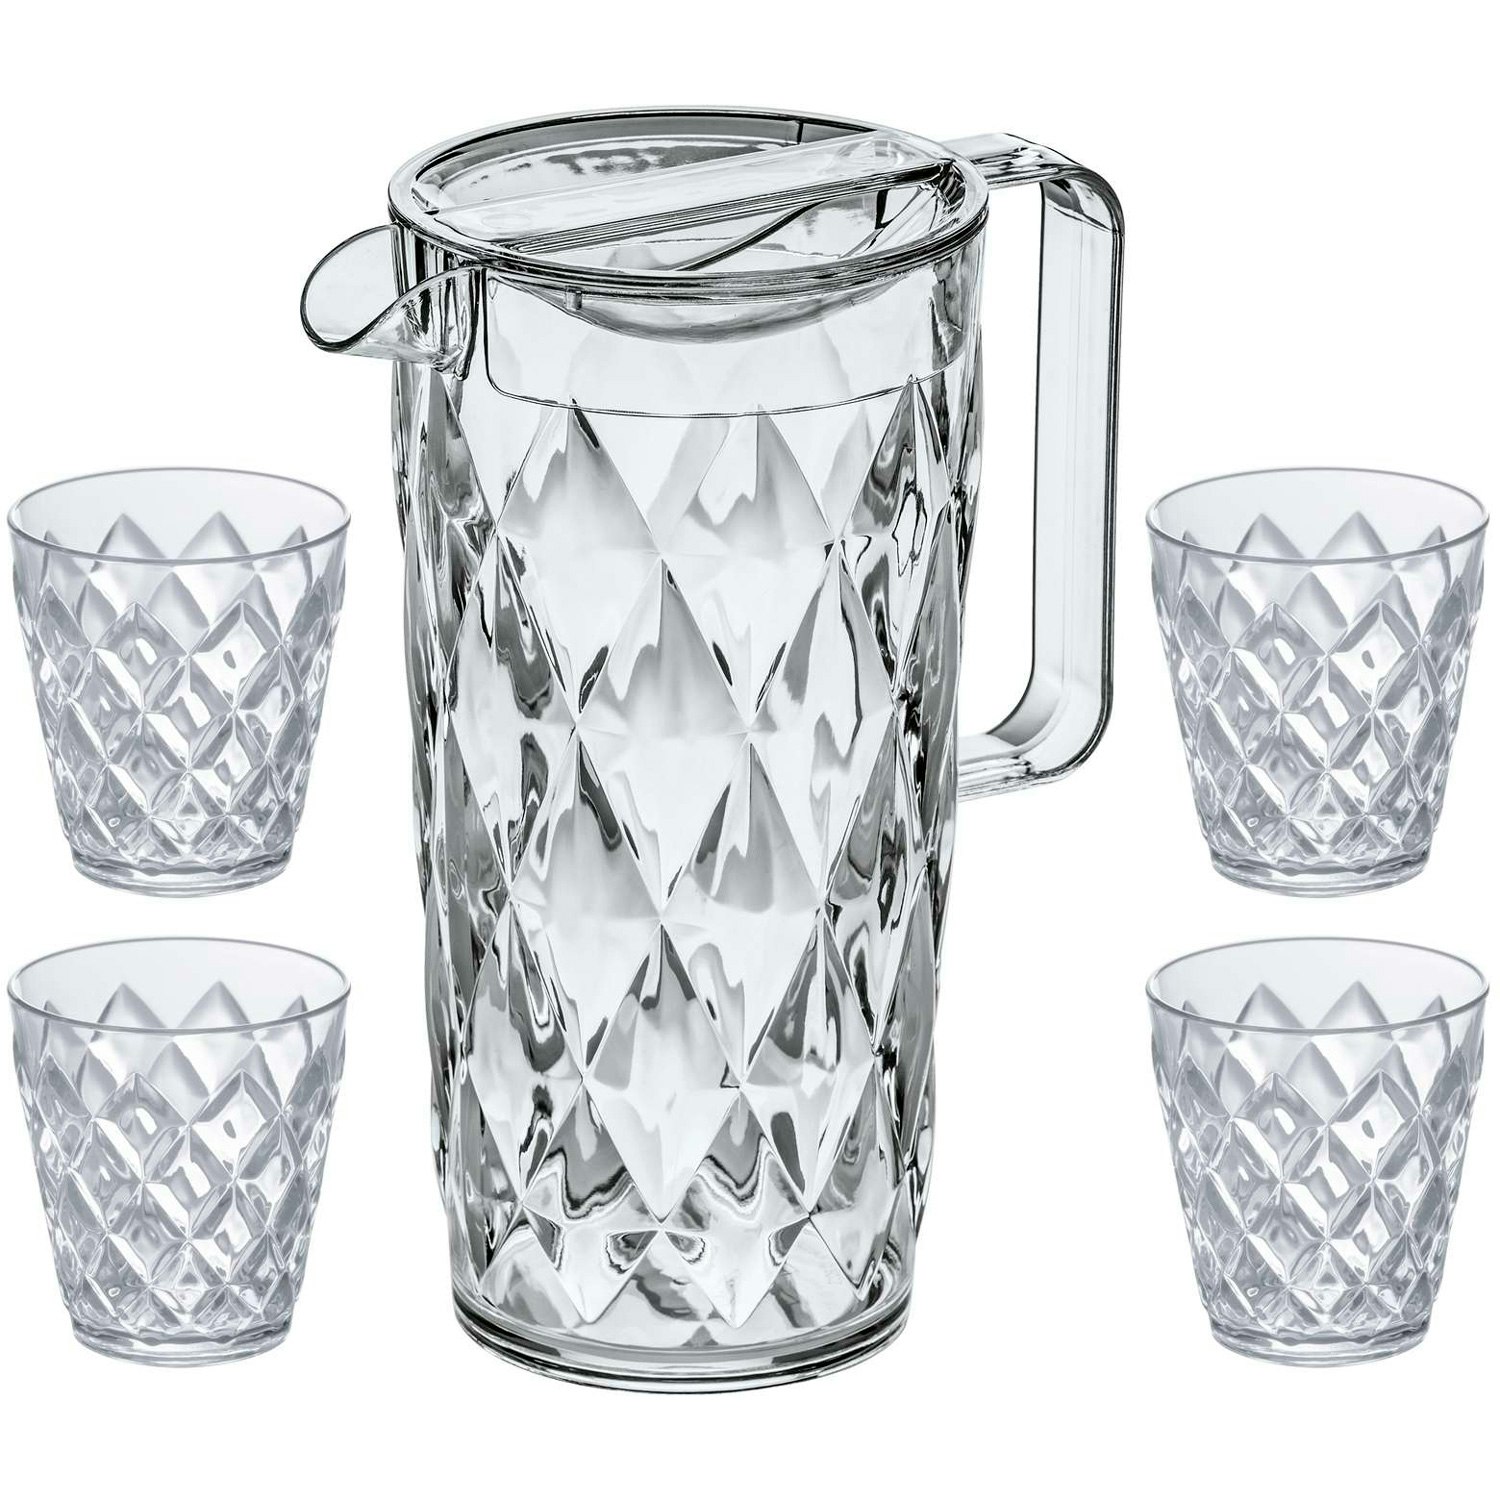 https://royaldesign.com/image/2/koziol-crystal-pitcher-4-tumbler-0